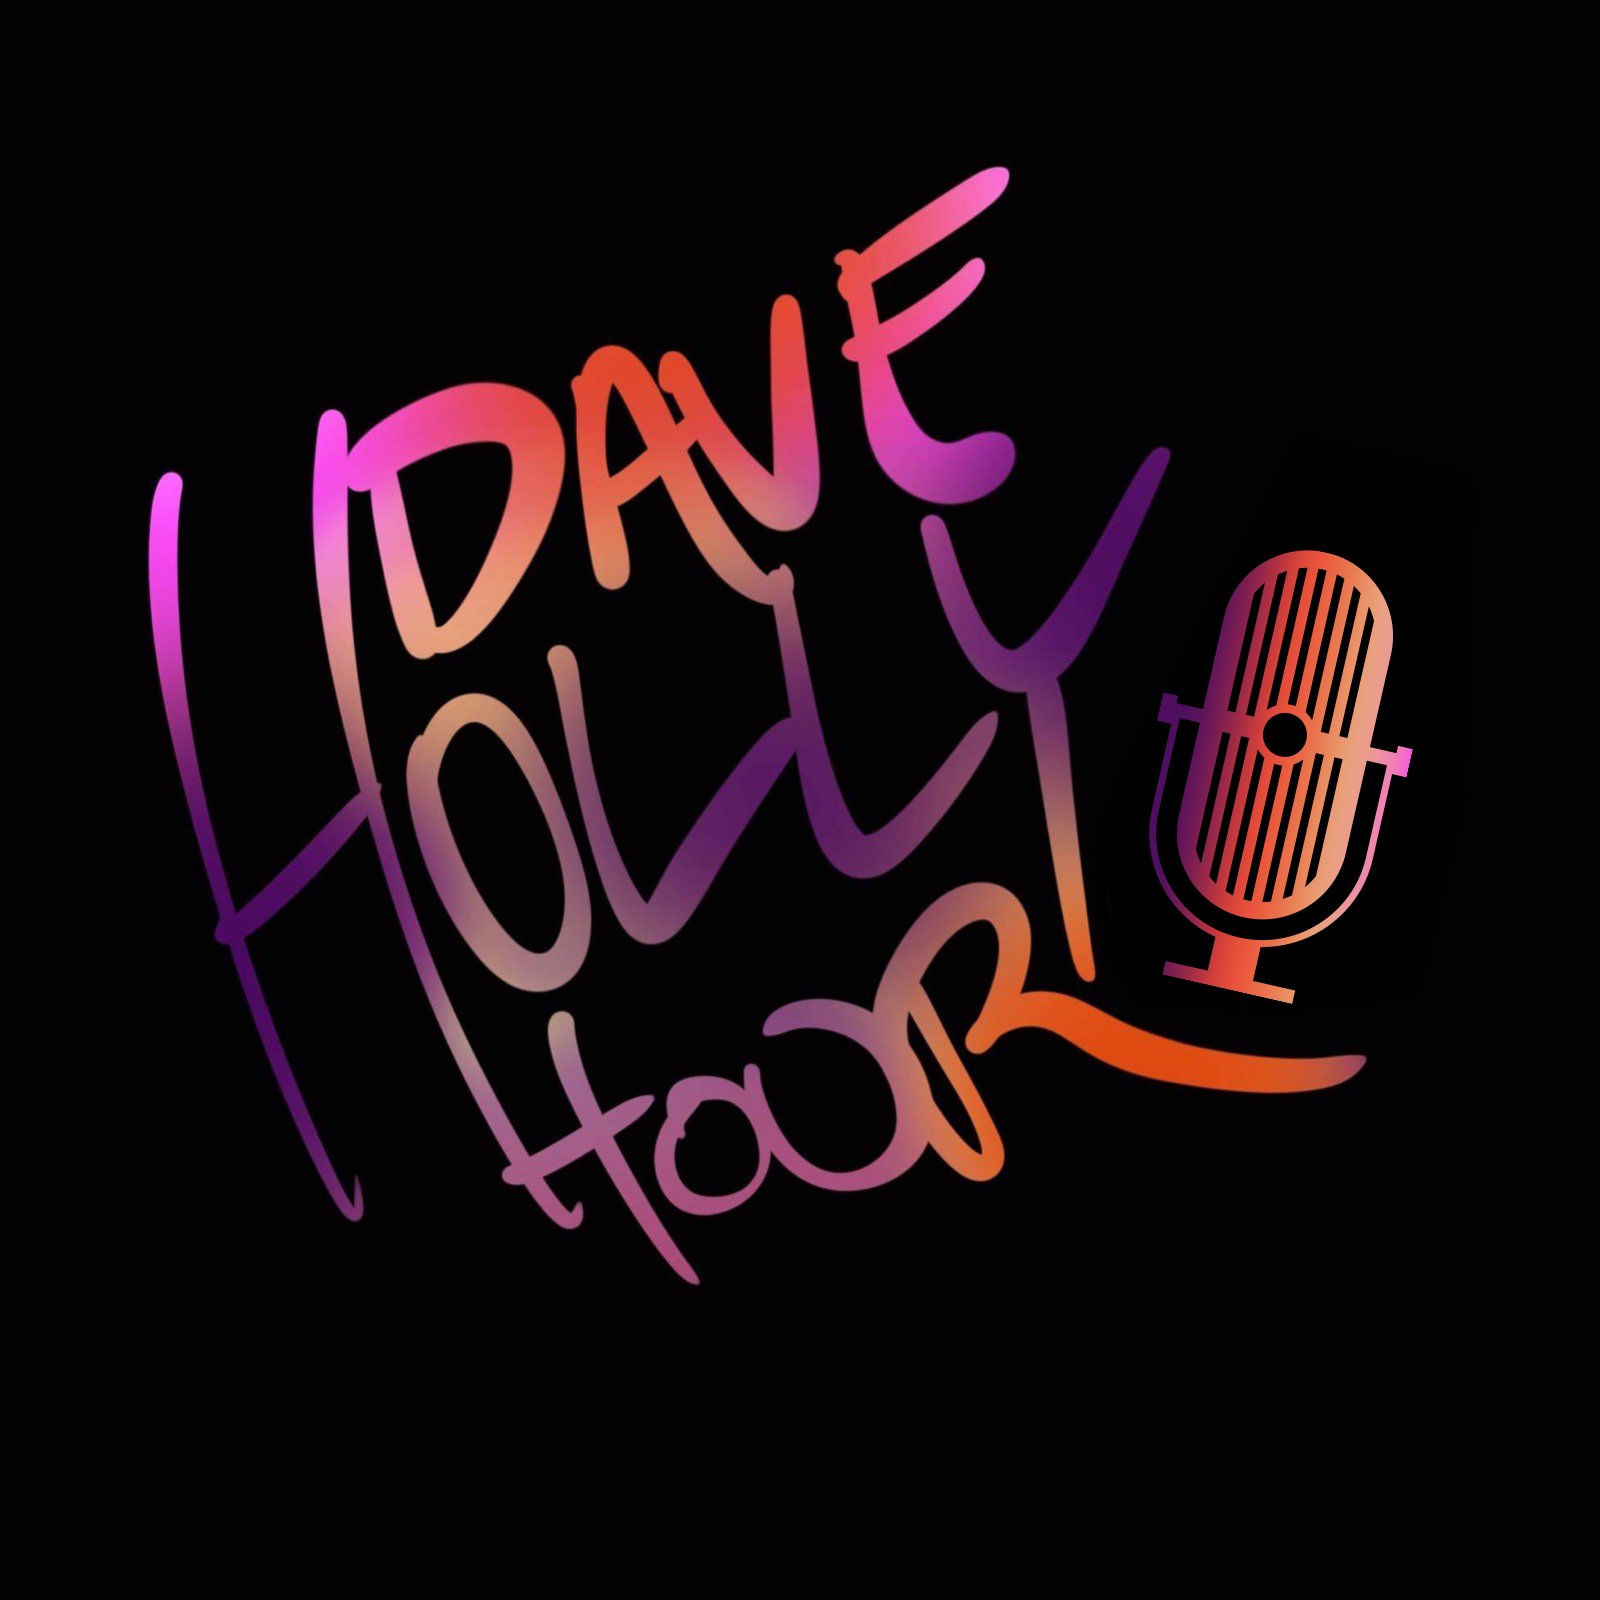 Dave Holly Hour Episode 150 October 6, 2022 Image